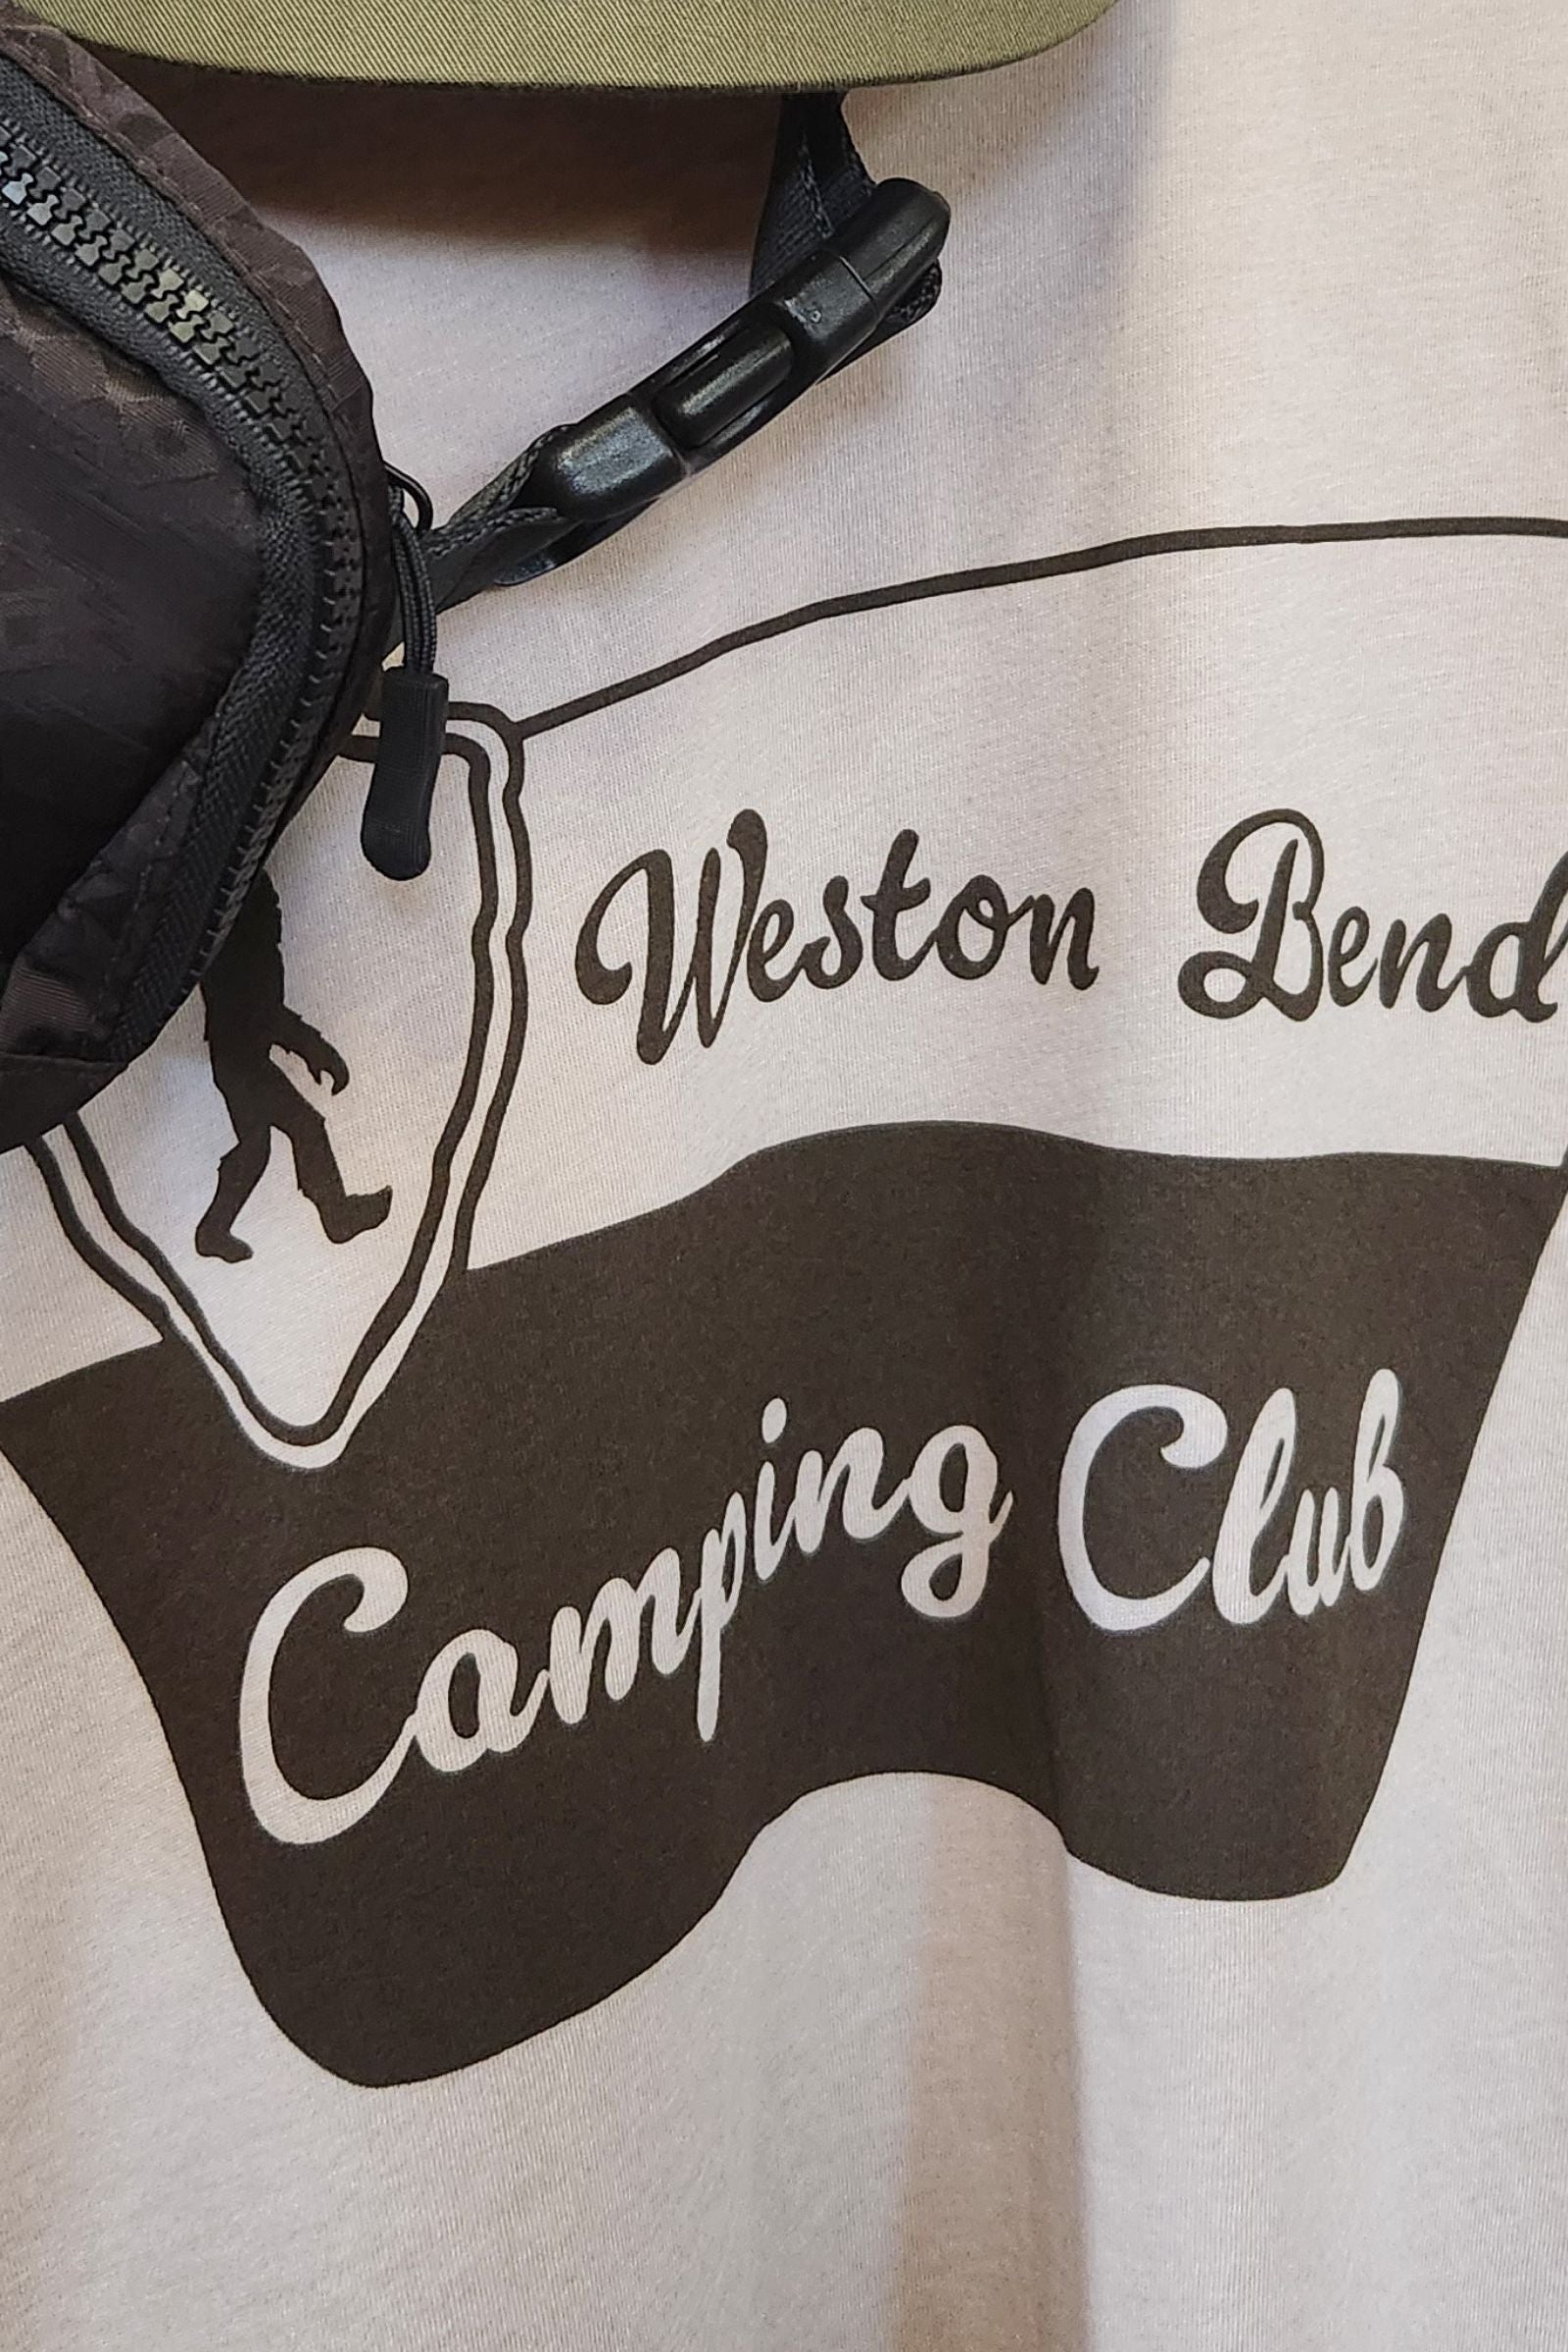 Weston Bend Camping Club T Shirt